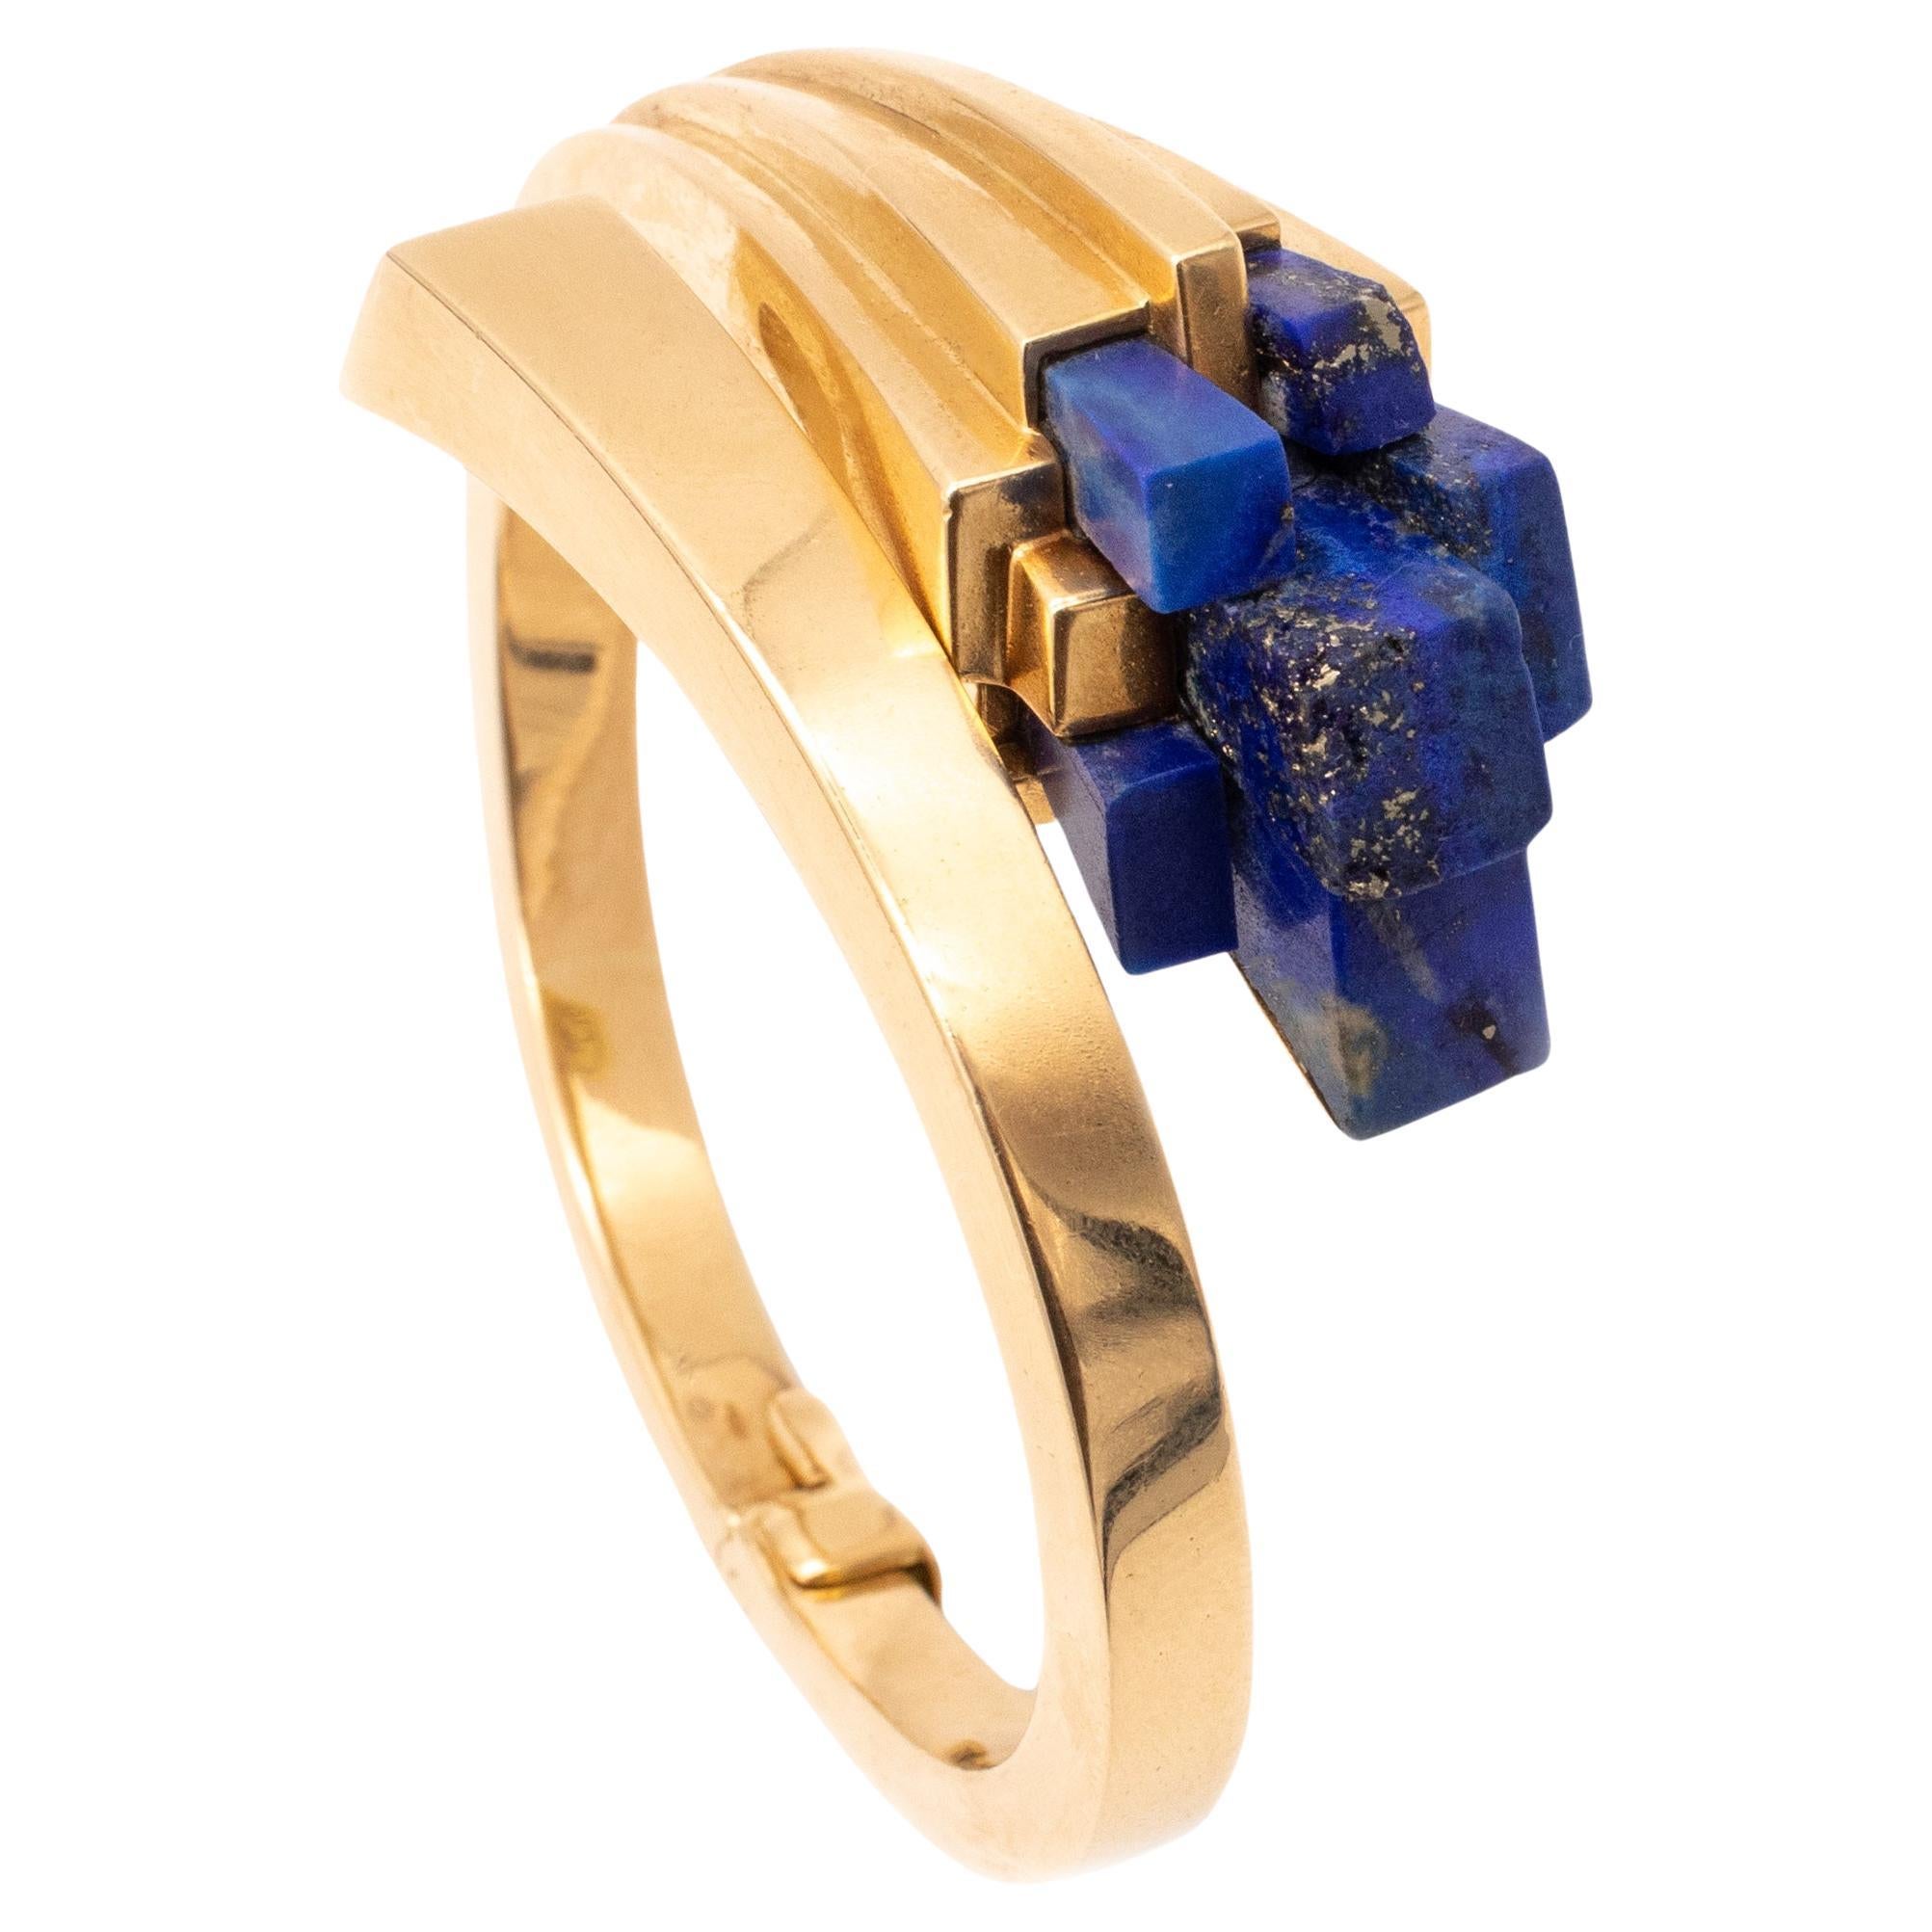 Mellerio 1970 Paris Very Rare Geometric Bracelet In 18Kt Gold With Lapis Lazuli For Sale